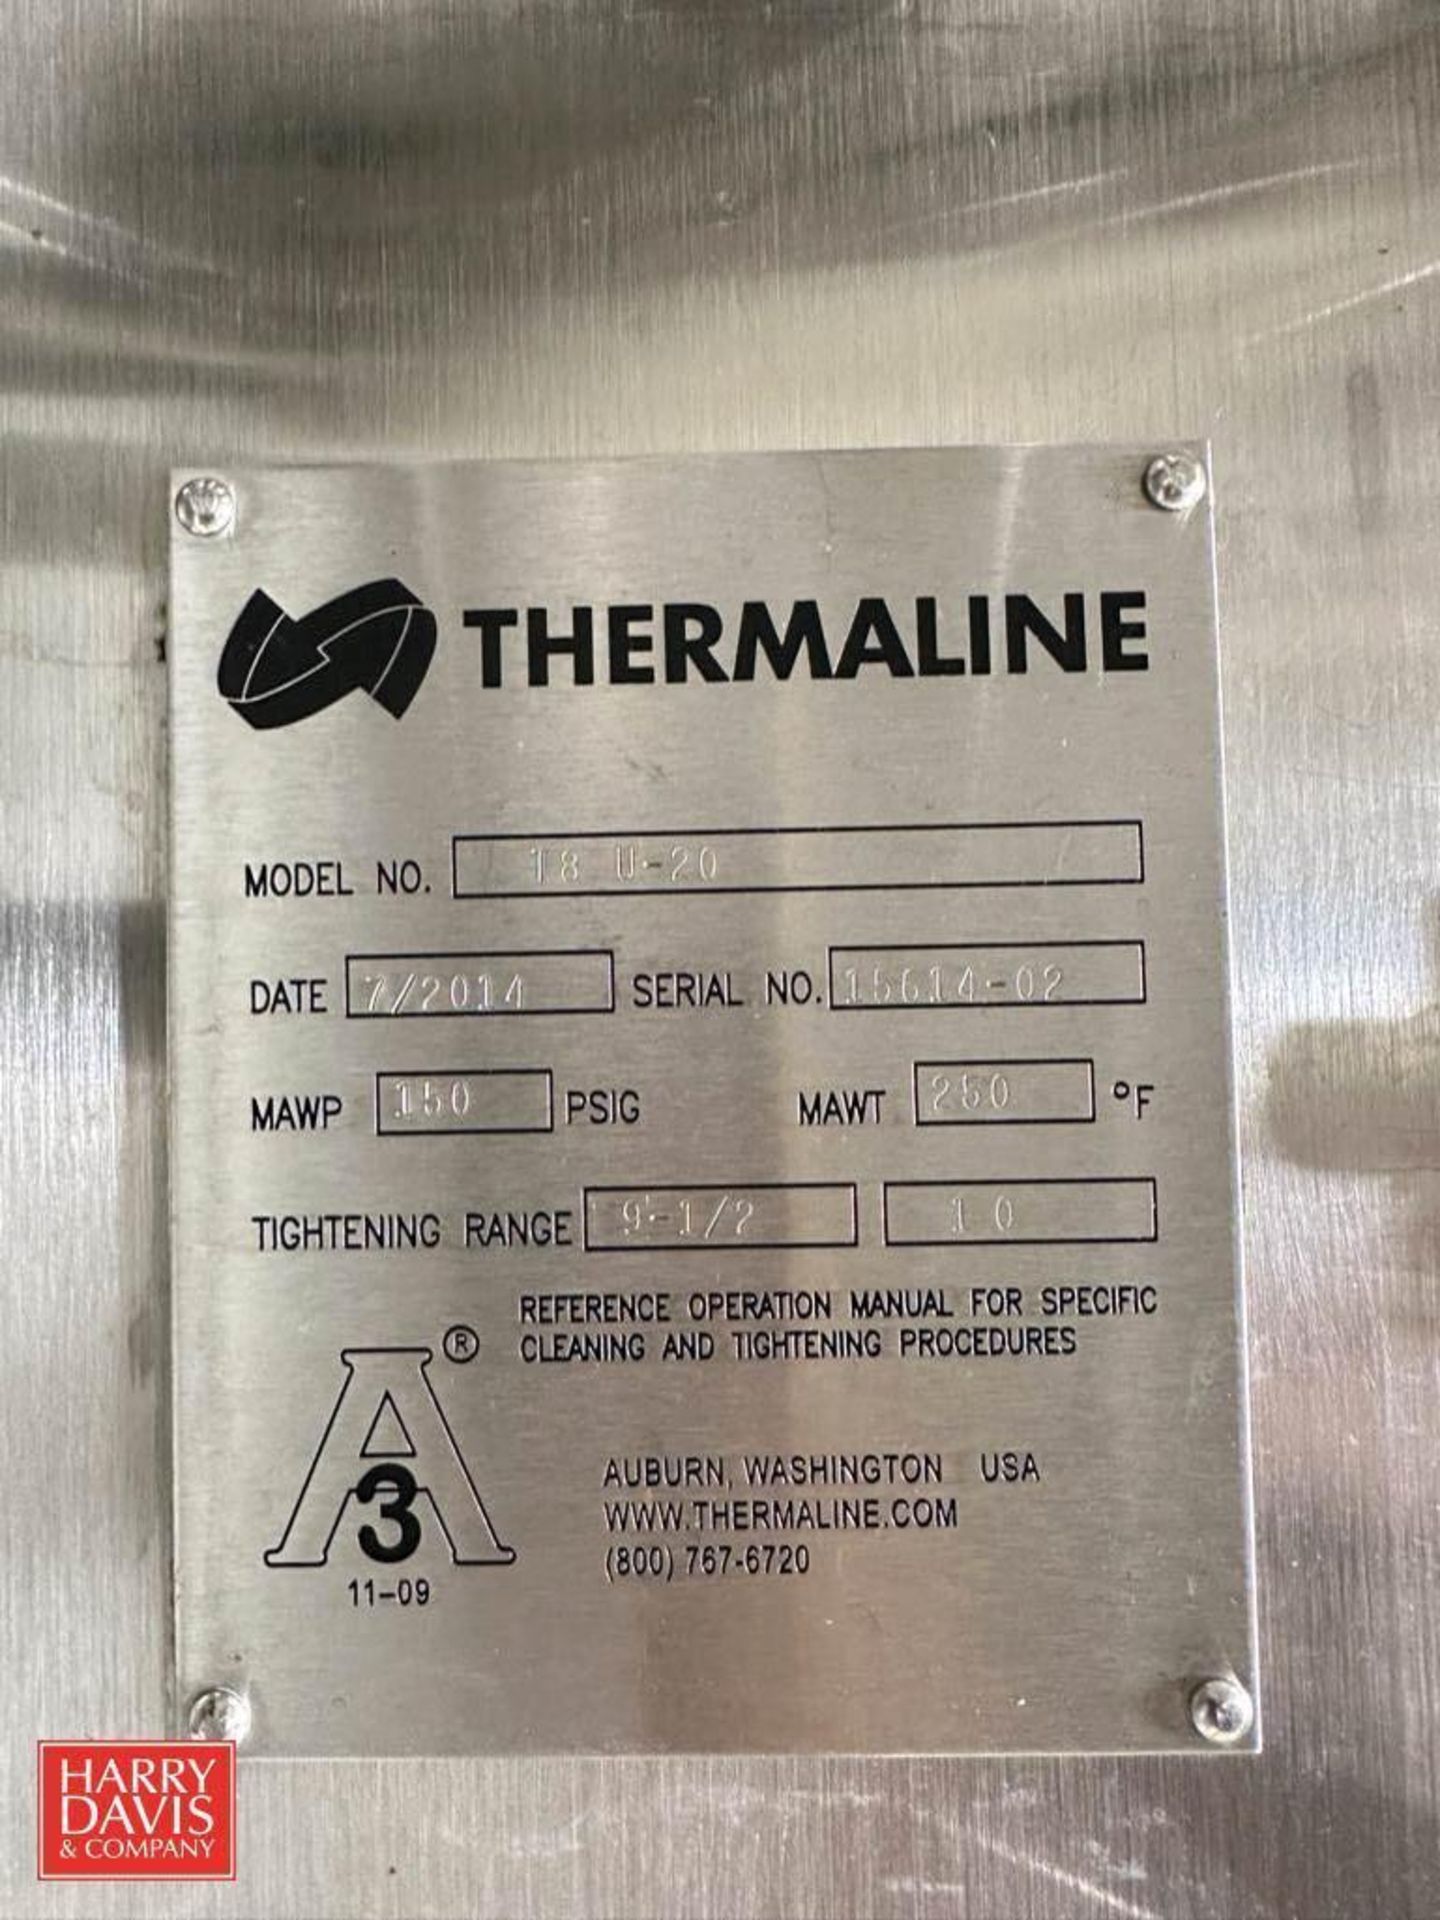 2014 Thermaline S/S Plate Heat Exchanger, Model: T8 U-20, S/N: 15614-02 - Image 2 of 2